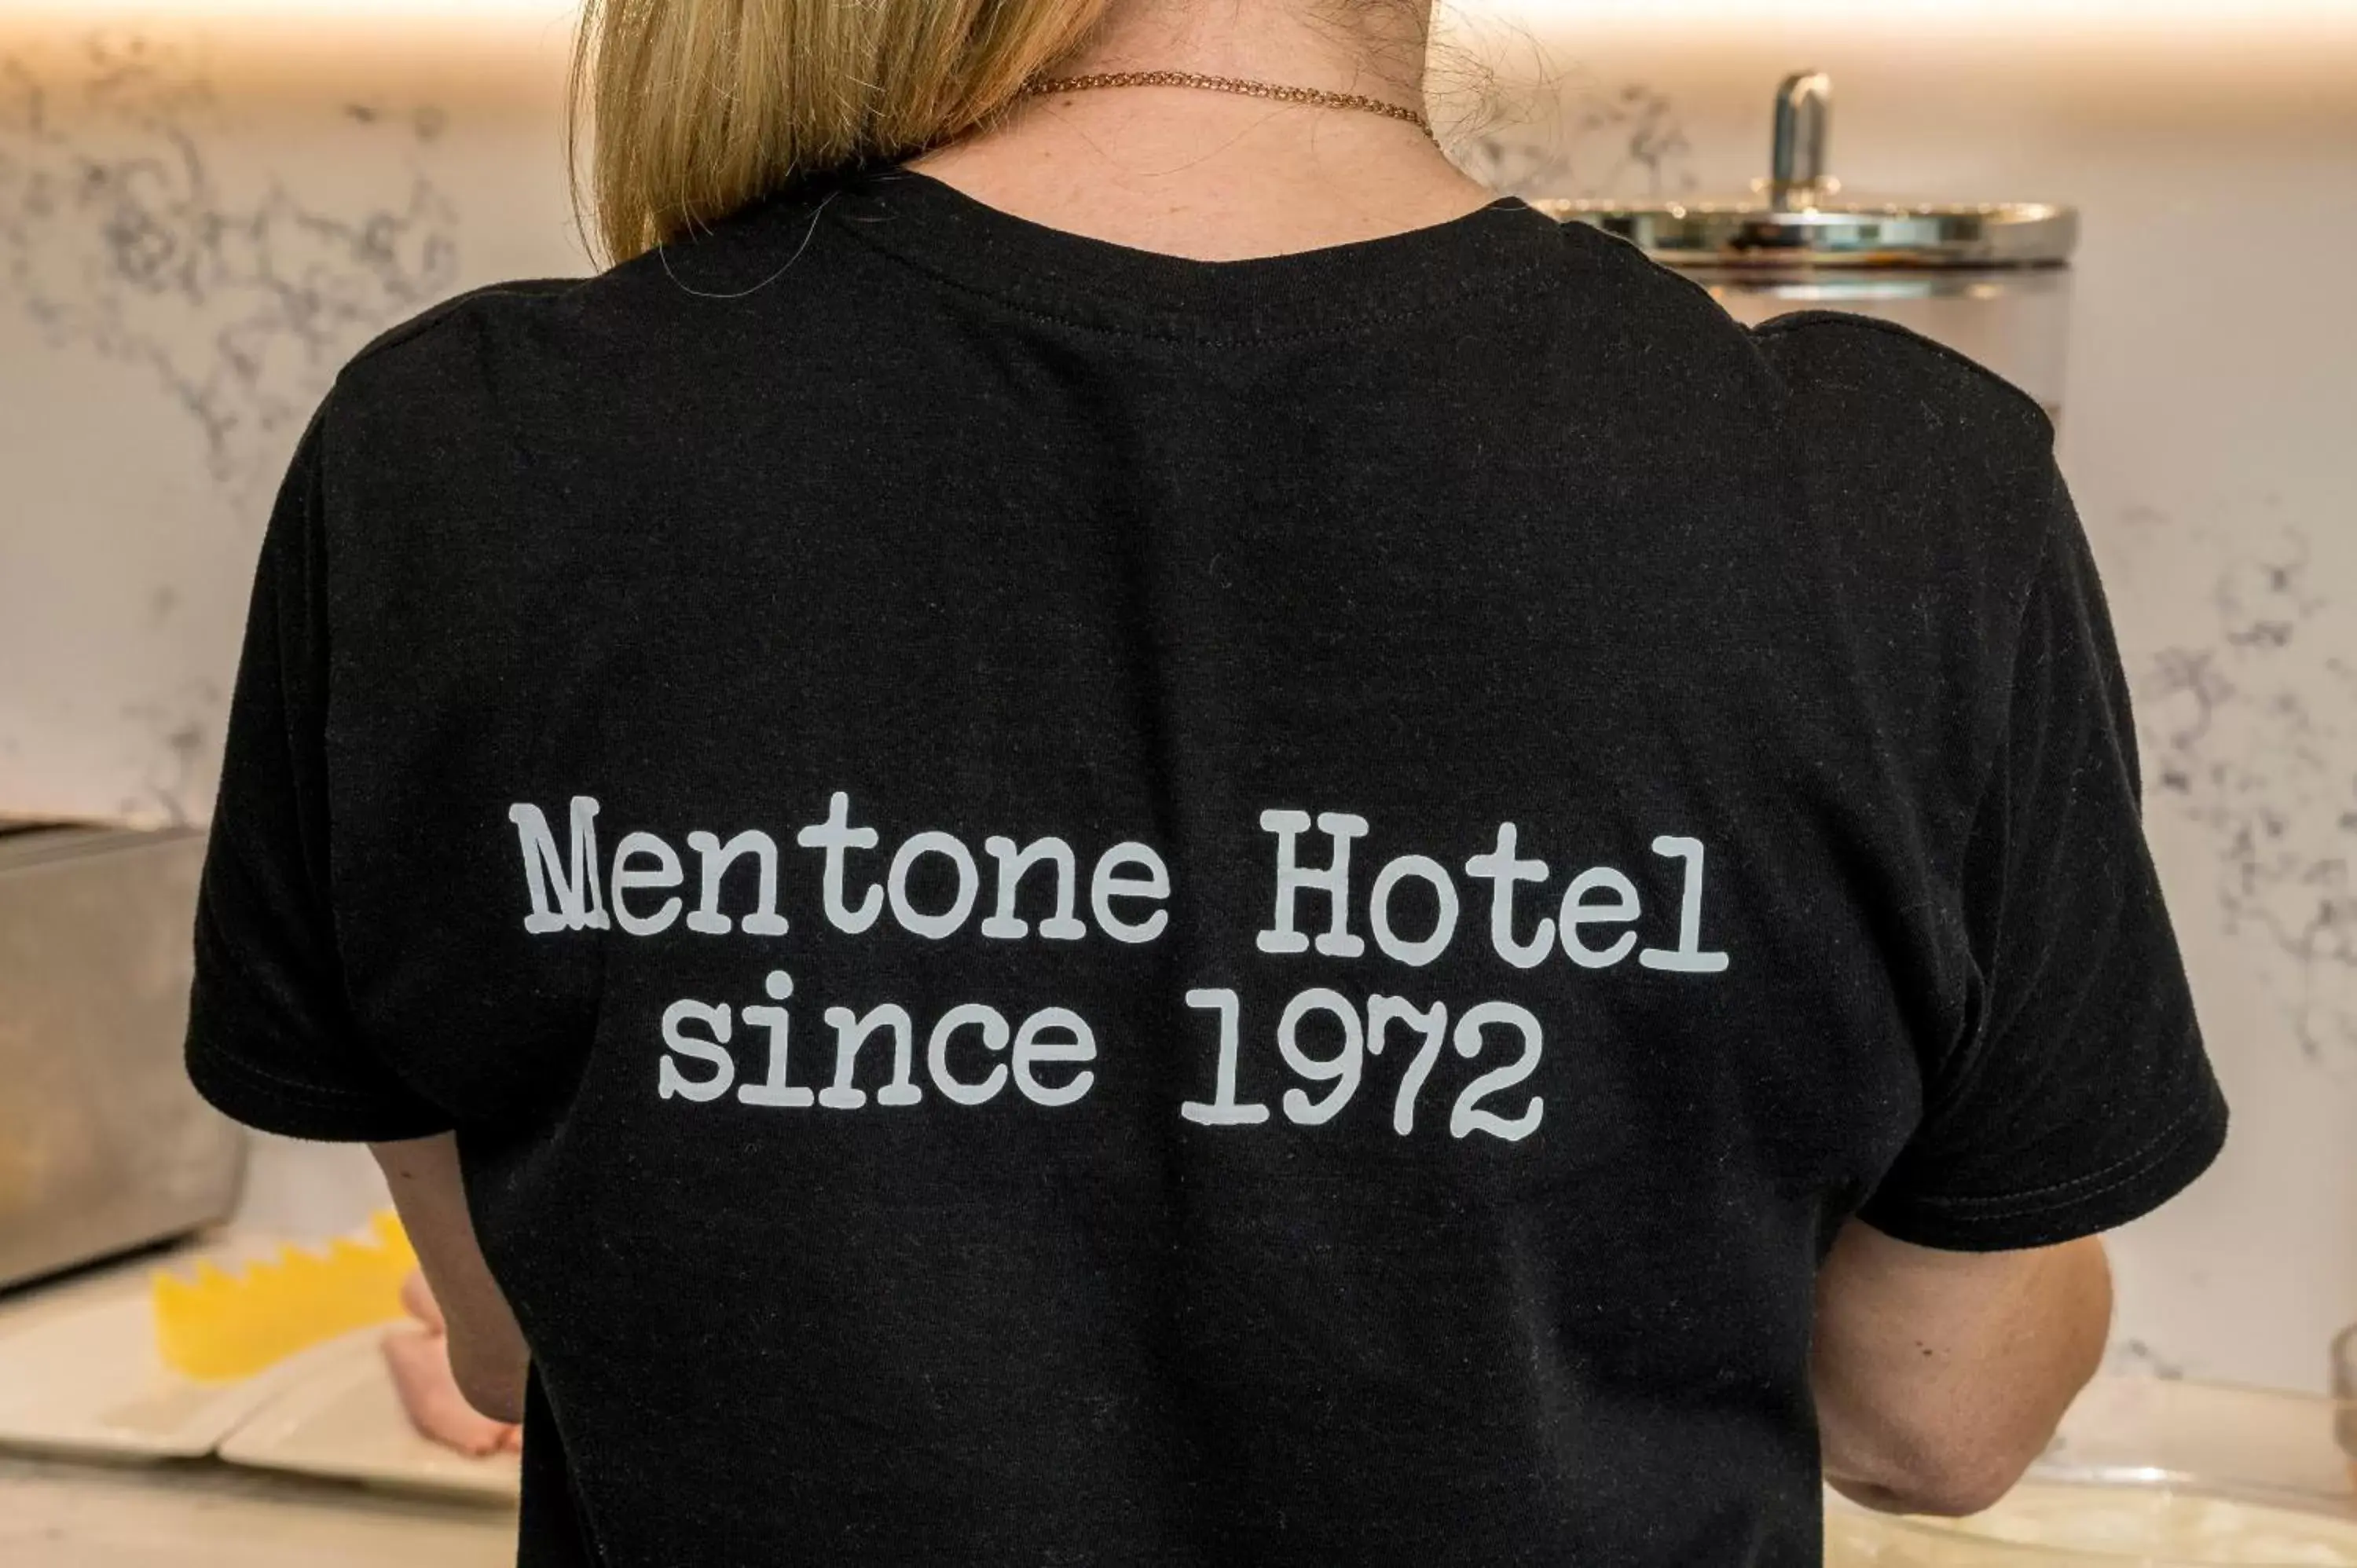 Staff in Mentone Hotel